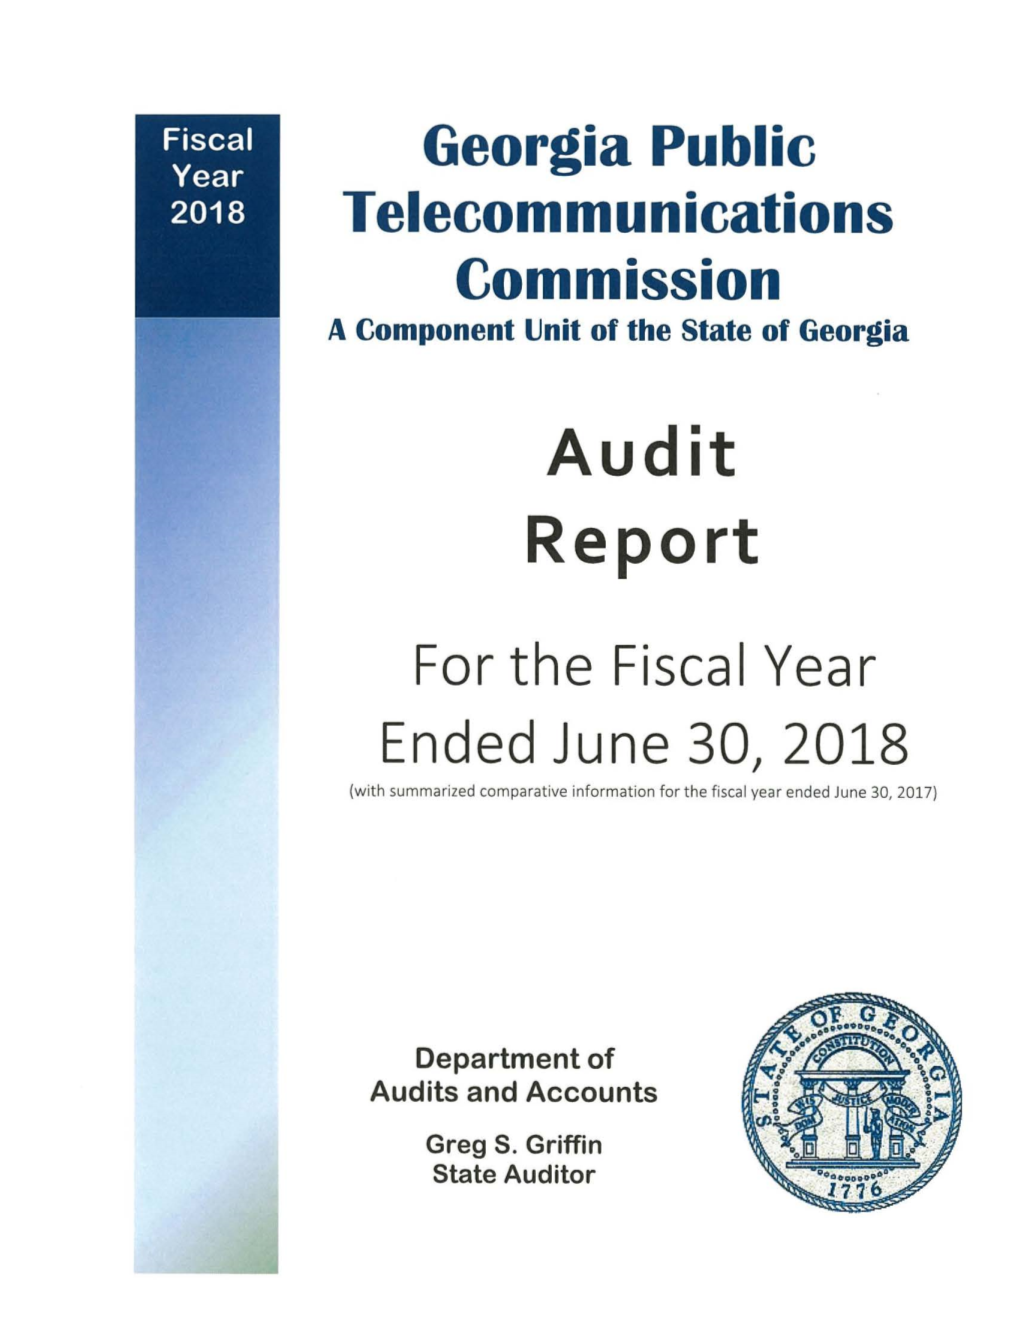 Georgia Public Telecommunications Commission Fiscal Year 2018 Audit